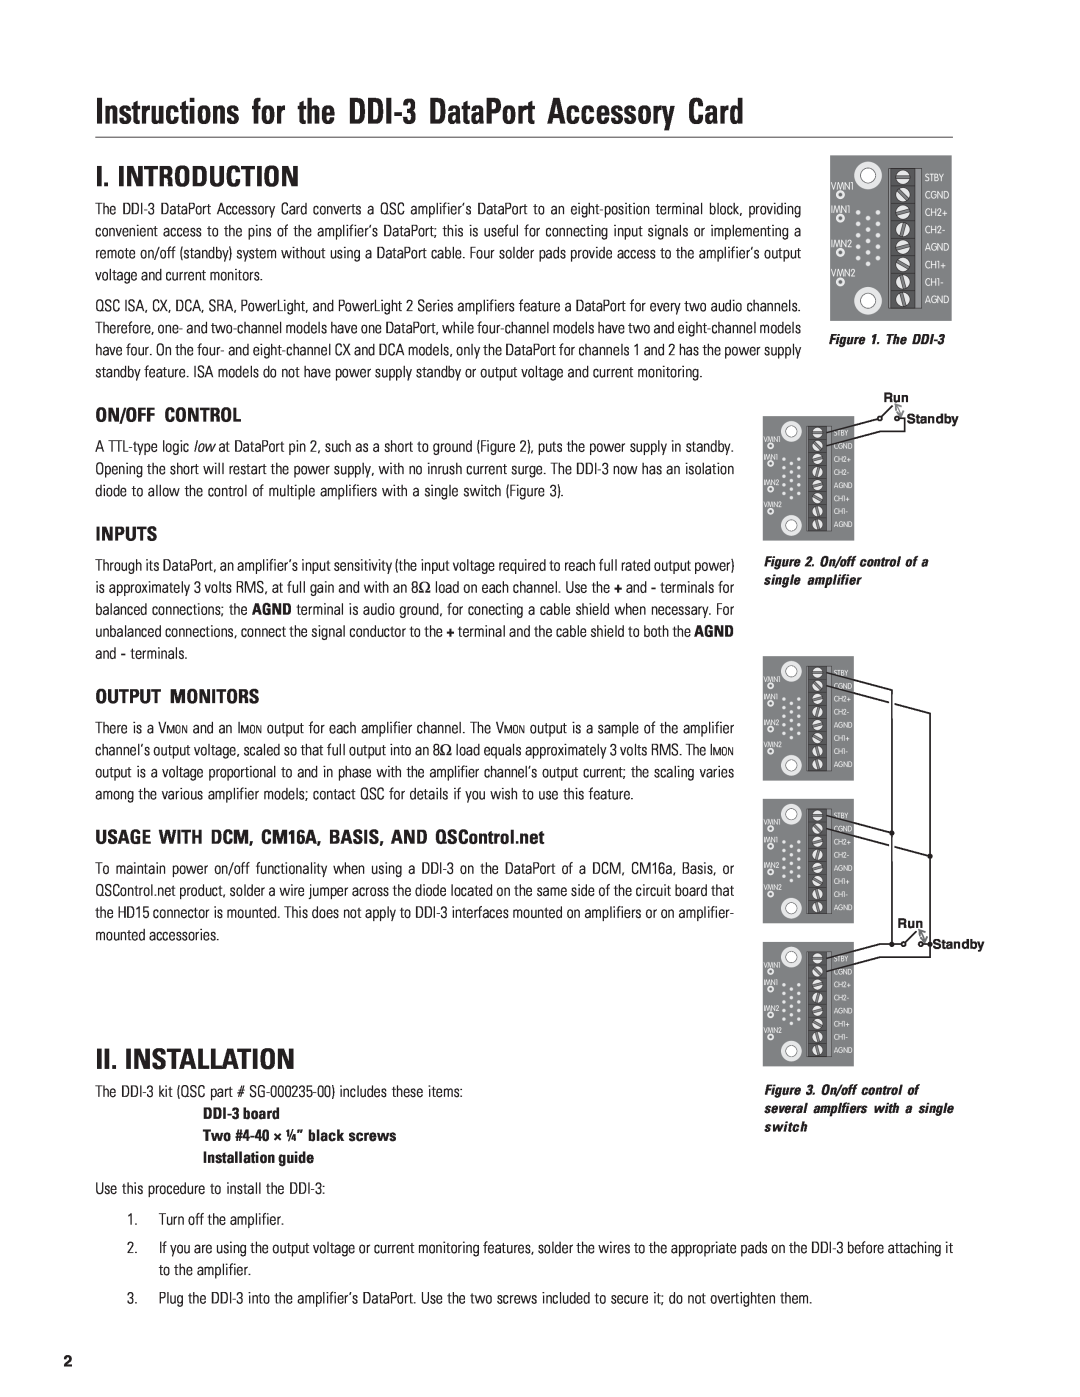 QSC Audio Data Port Access Card DDI-3 manual On/Off Control, Inputs, Output Monitors, I. Introduction, Ii. Installation 